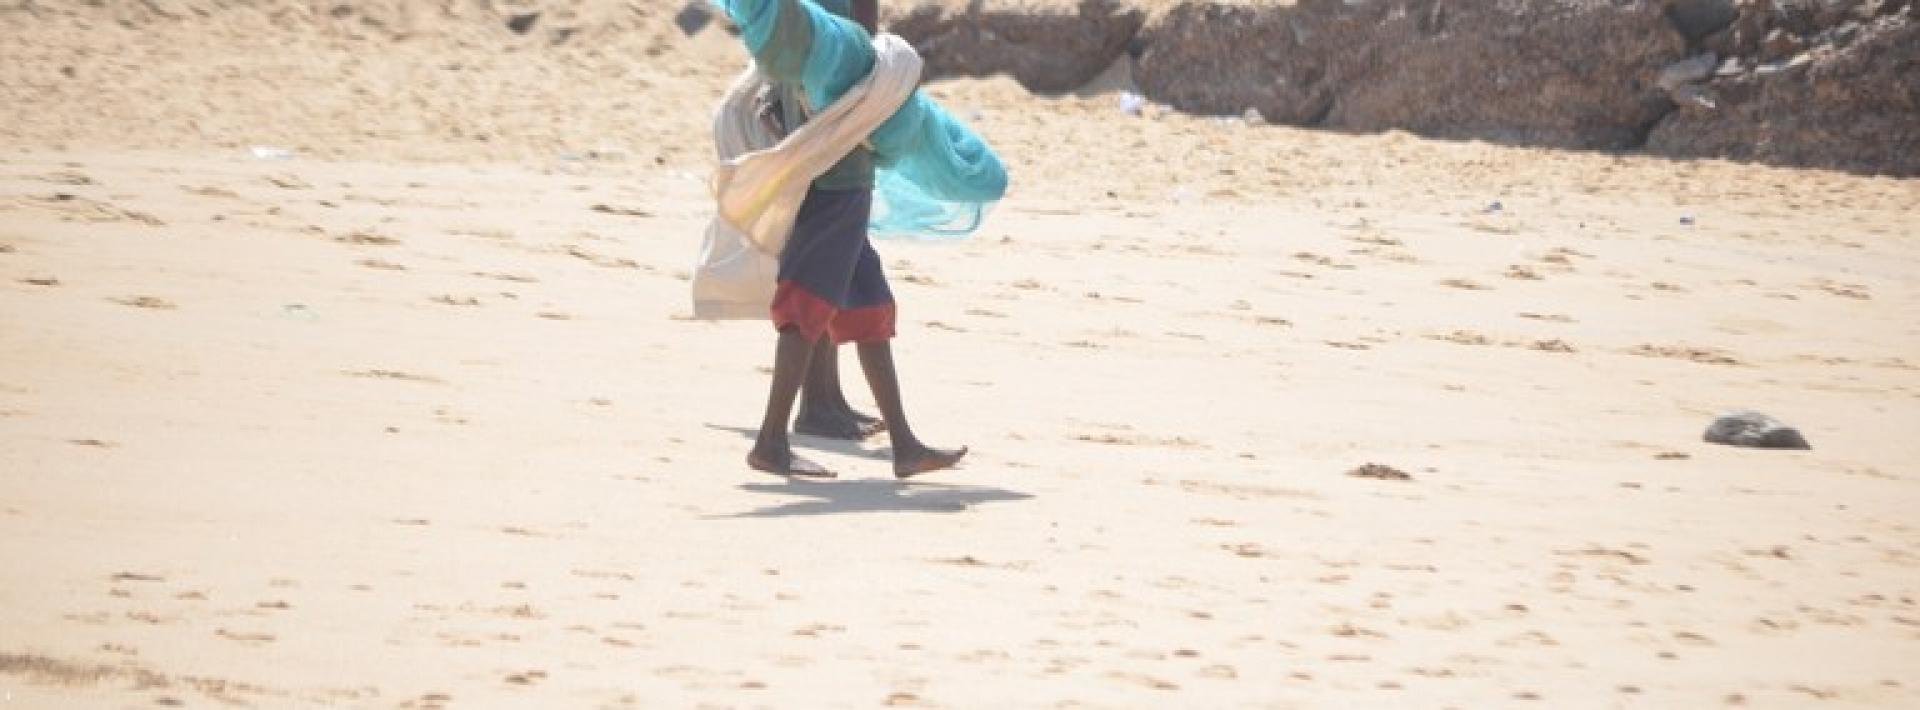 Women, children bear brunt of climate change in Zimbabwe